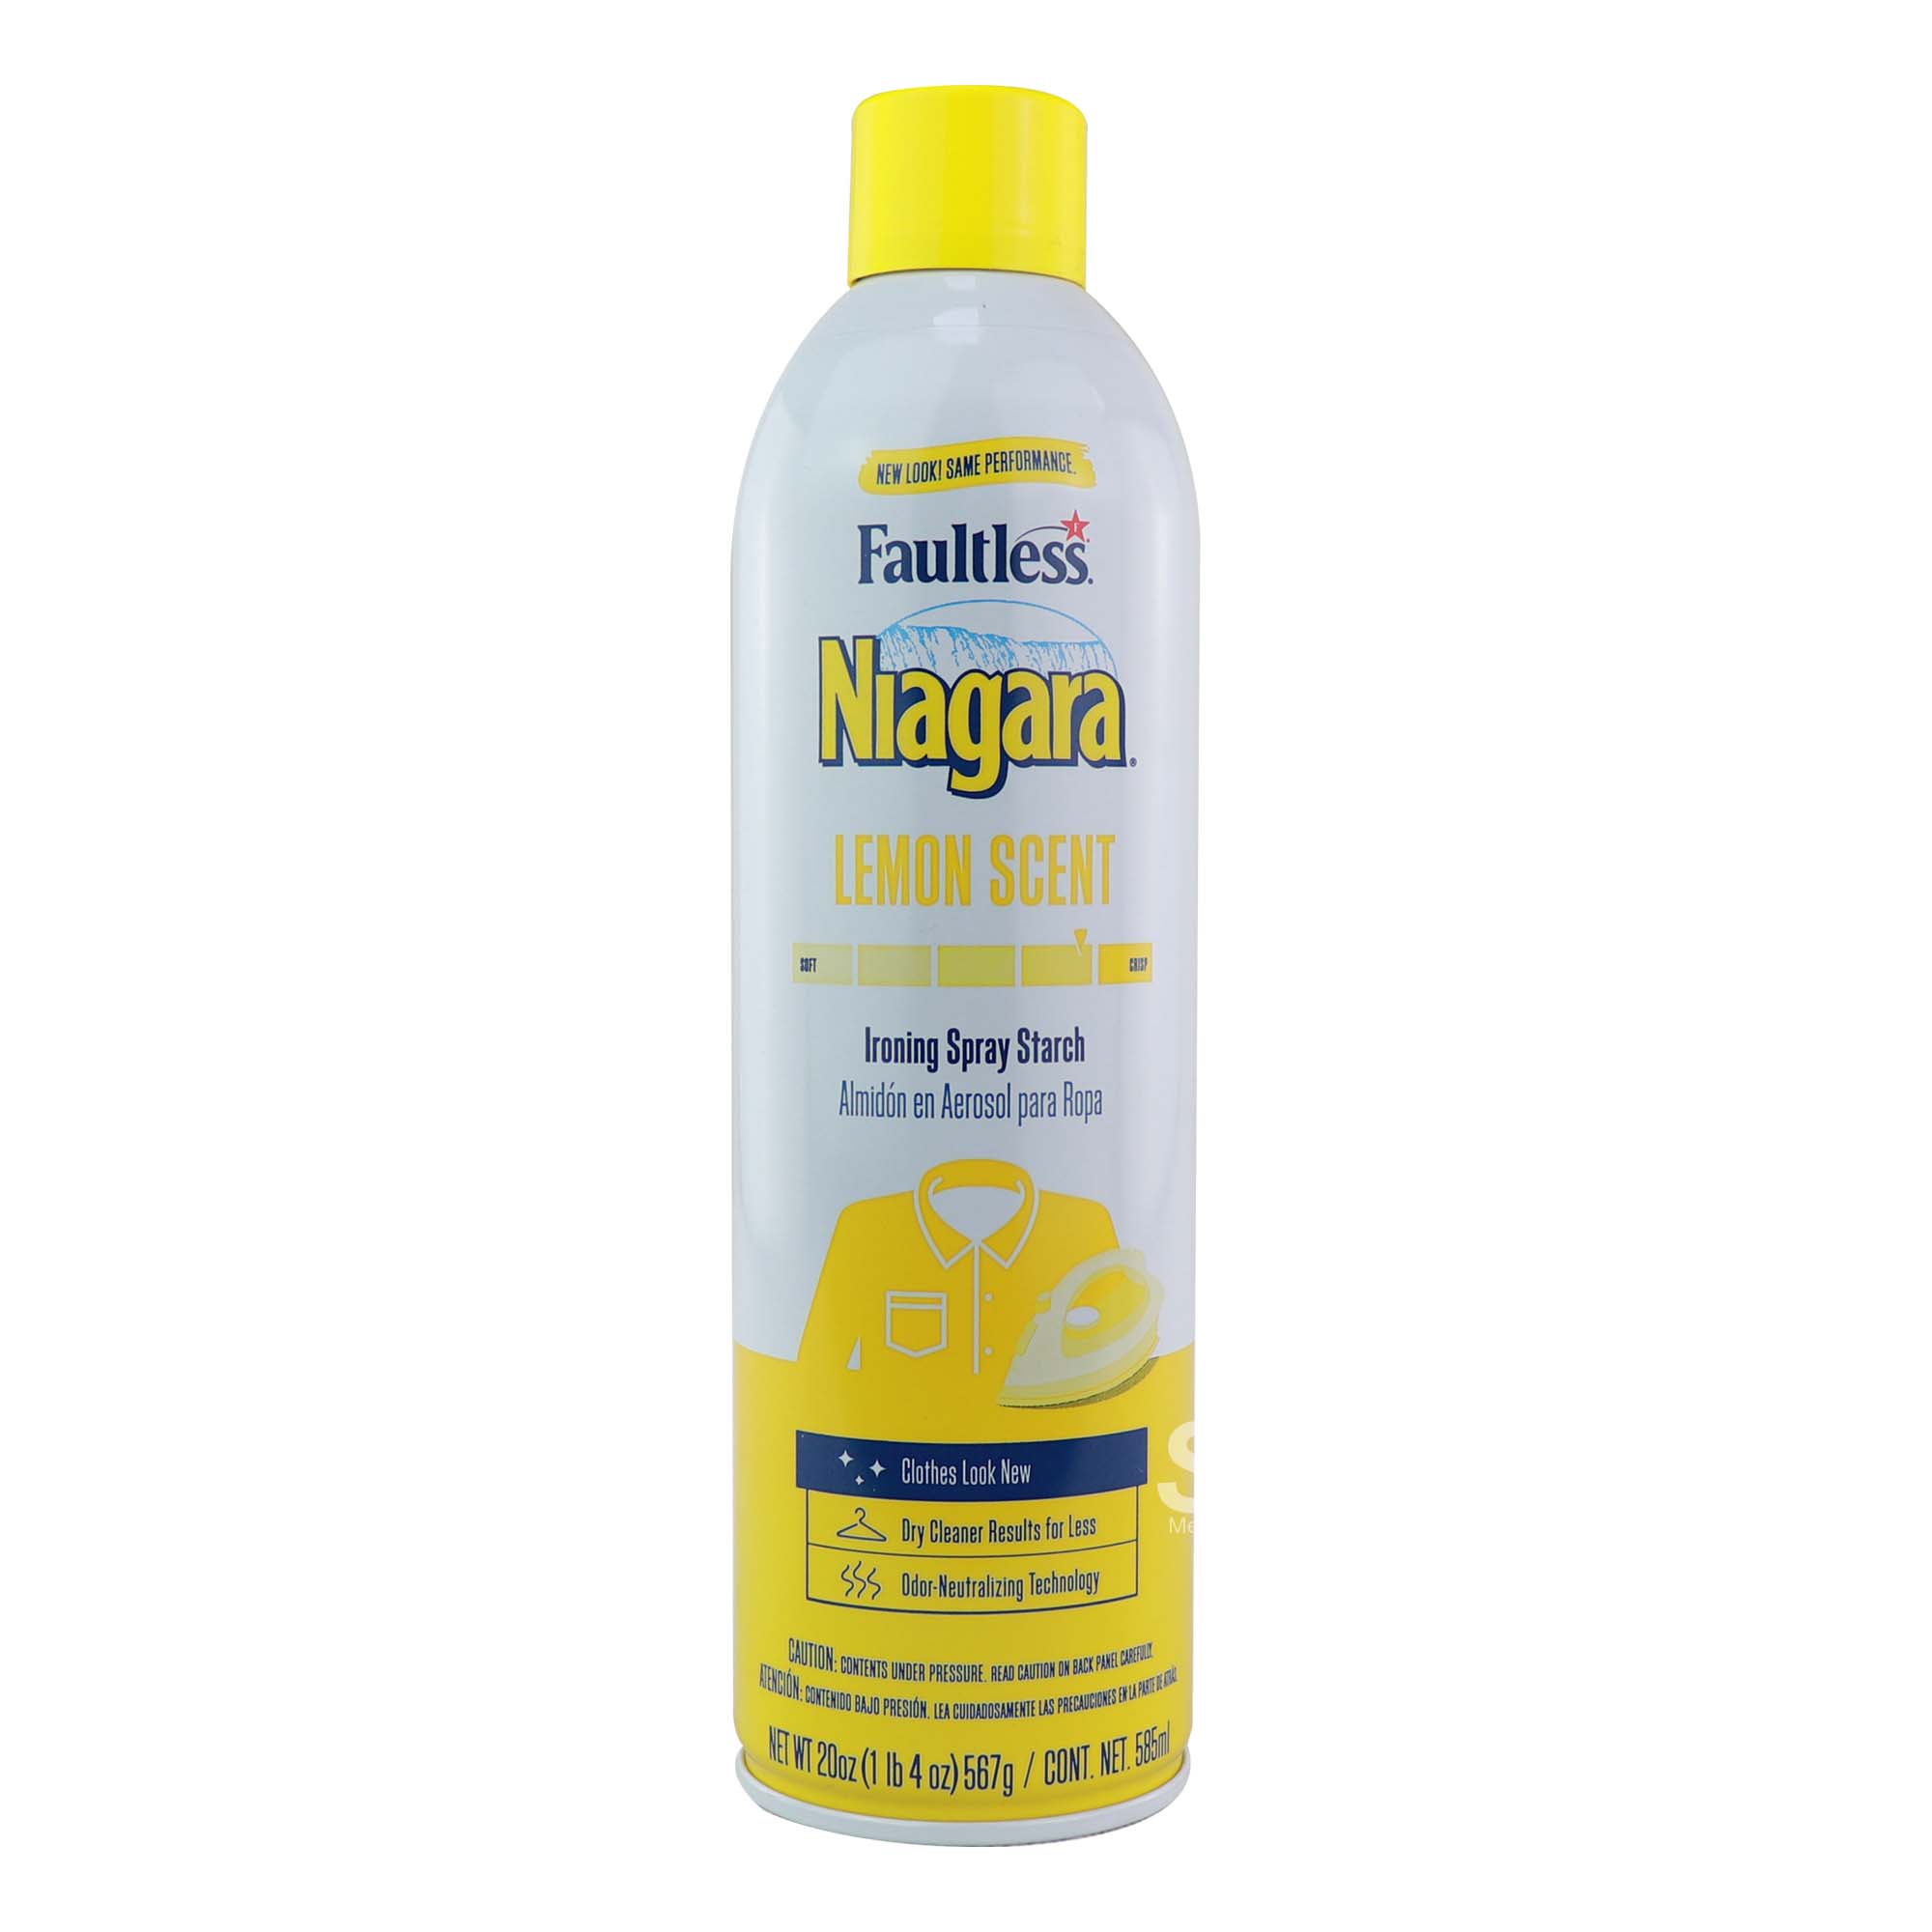 Faultless Niagara Lemon Scent Ironing Spray Starch 585mL